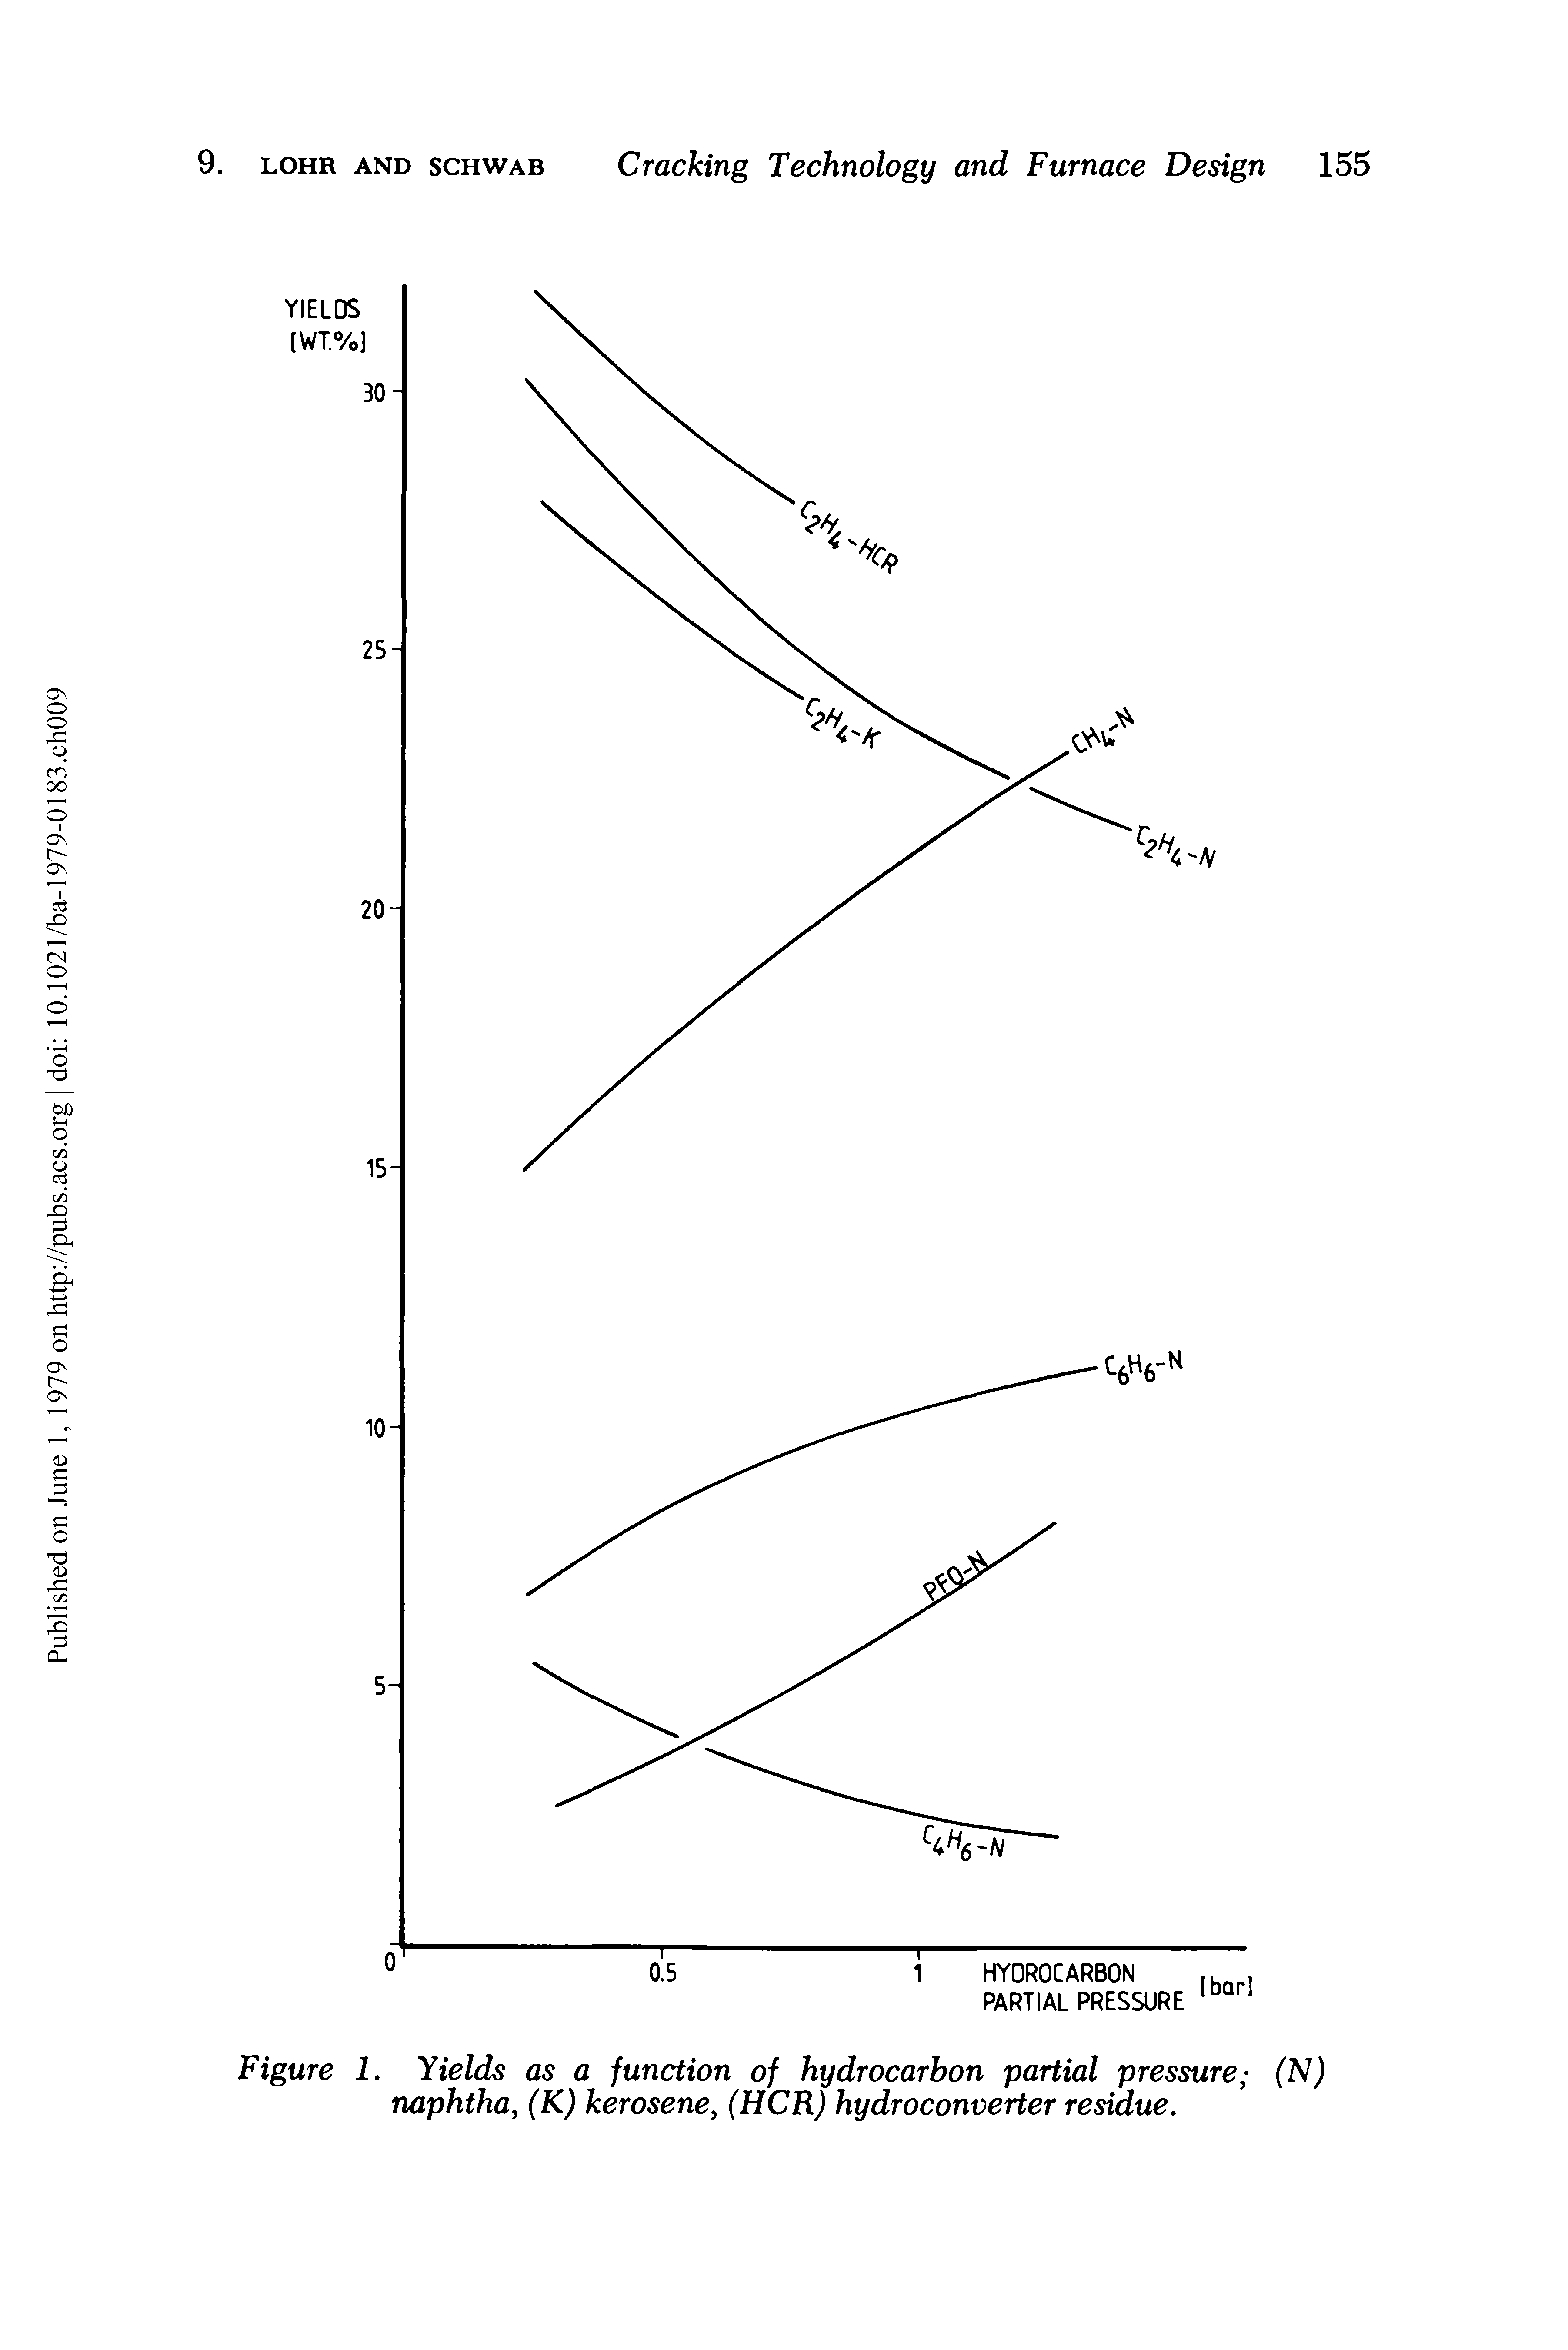 Figure 1. Yields as a function of hydrocarbon partial pressure (N) naphtha, (K) kerosene, (HCR) hydroconverter residue.